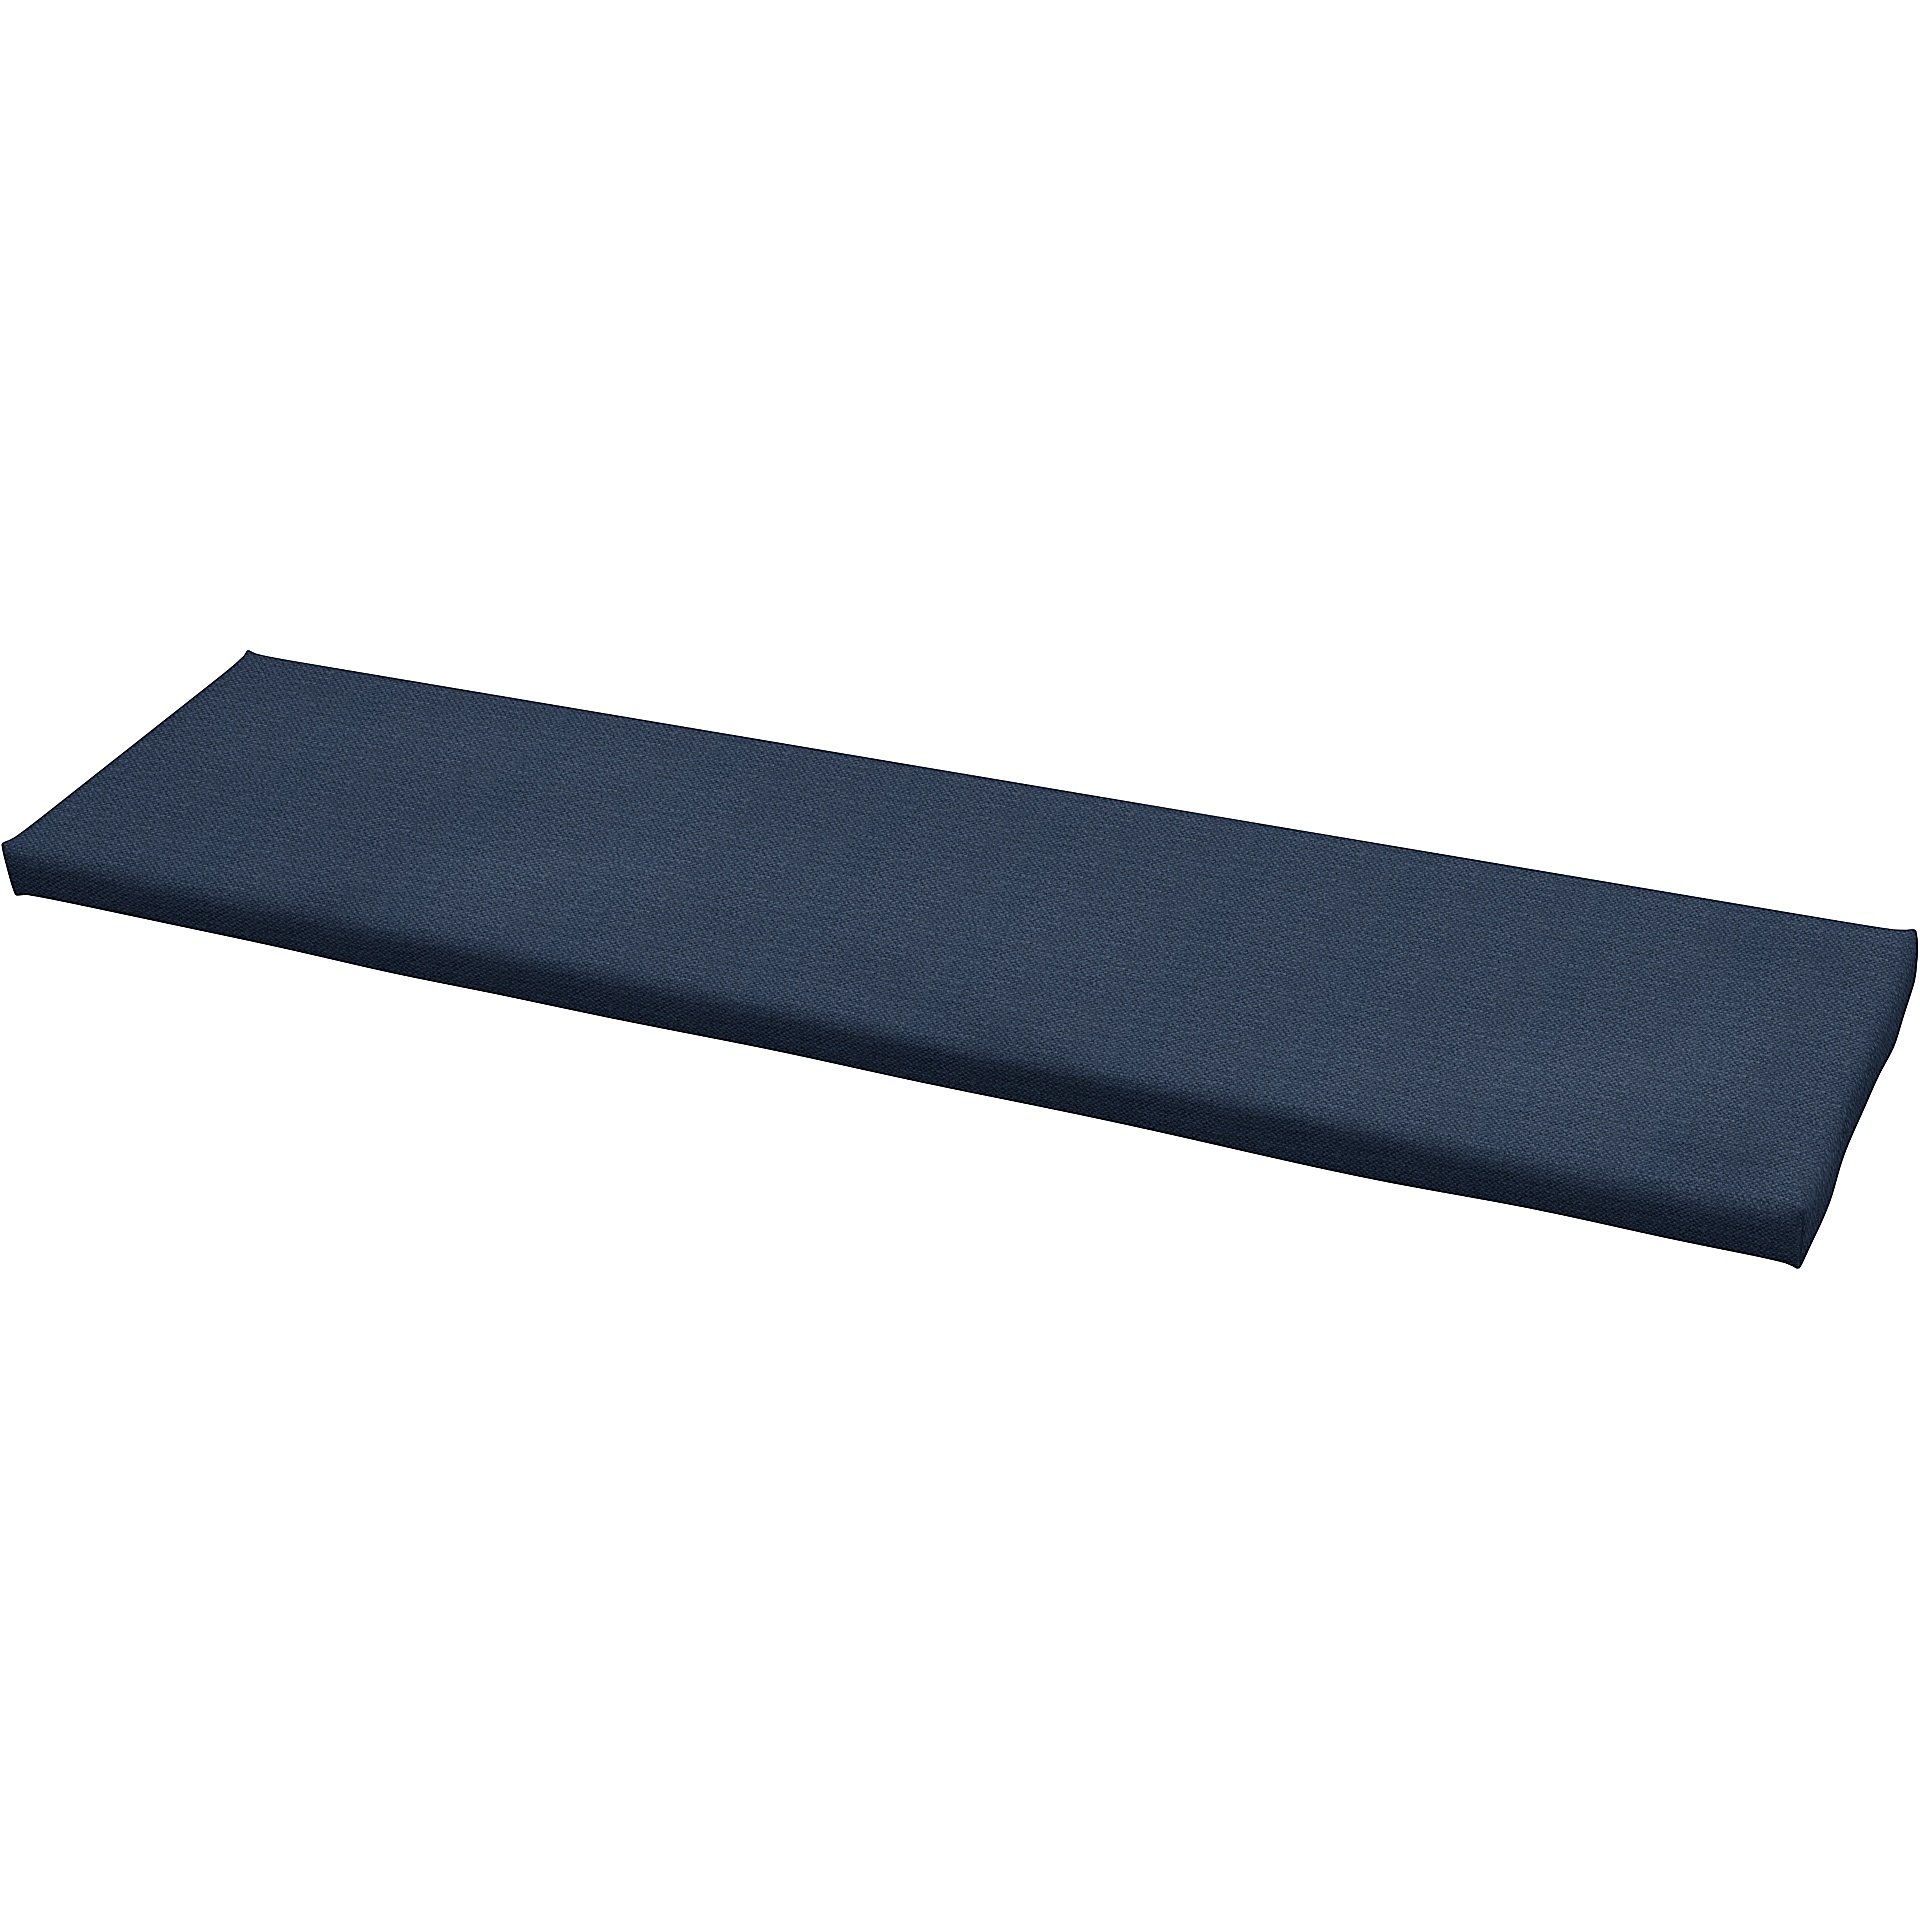 IKEA - Universal bench cushion cover 140x35x3,5 cm, Navy Blue, Linen - Bemz